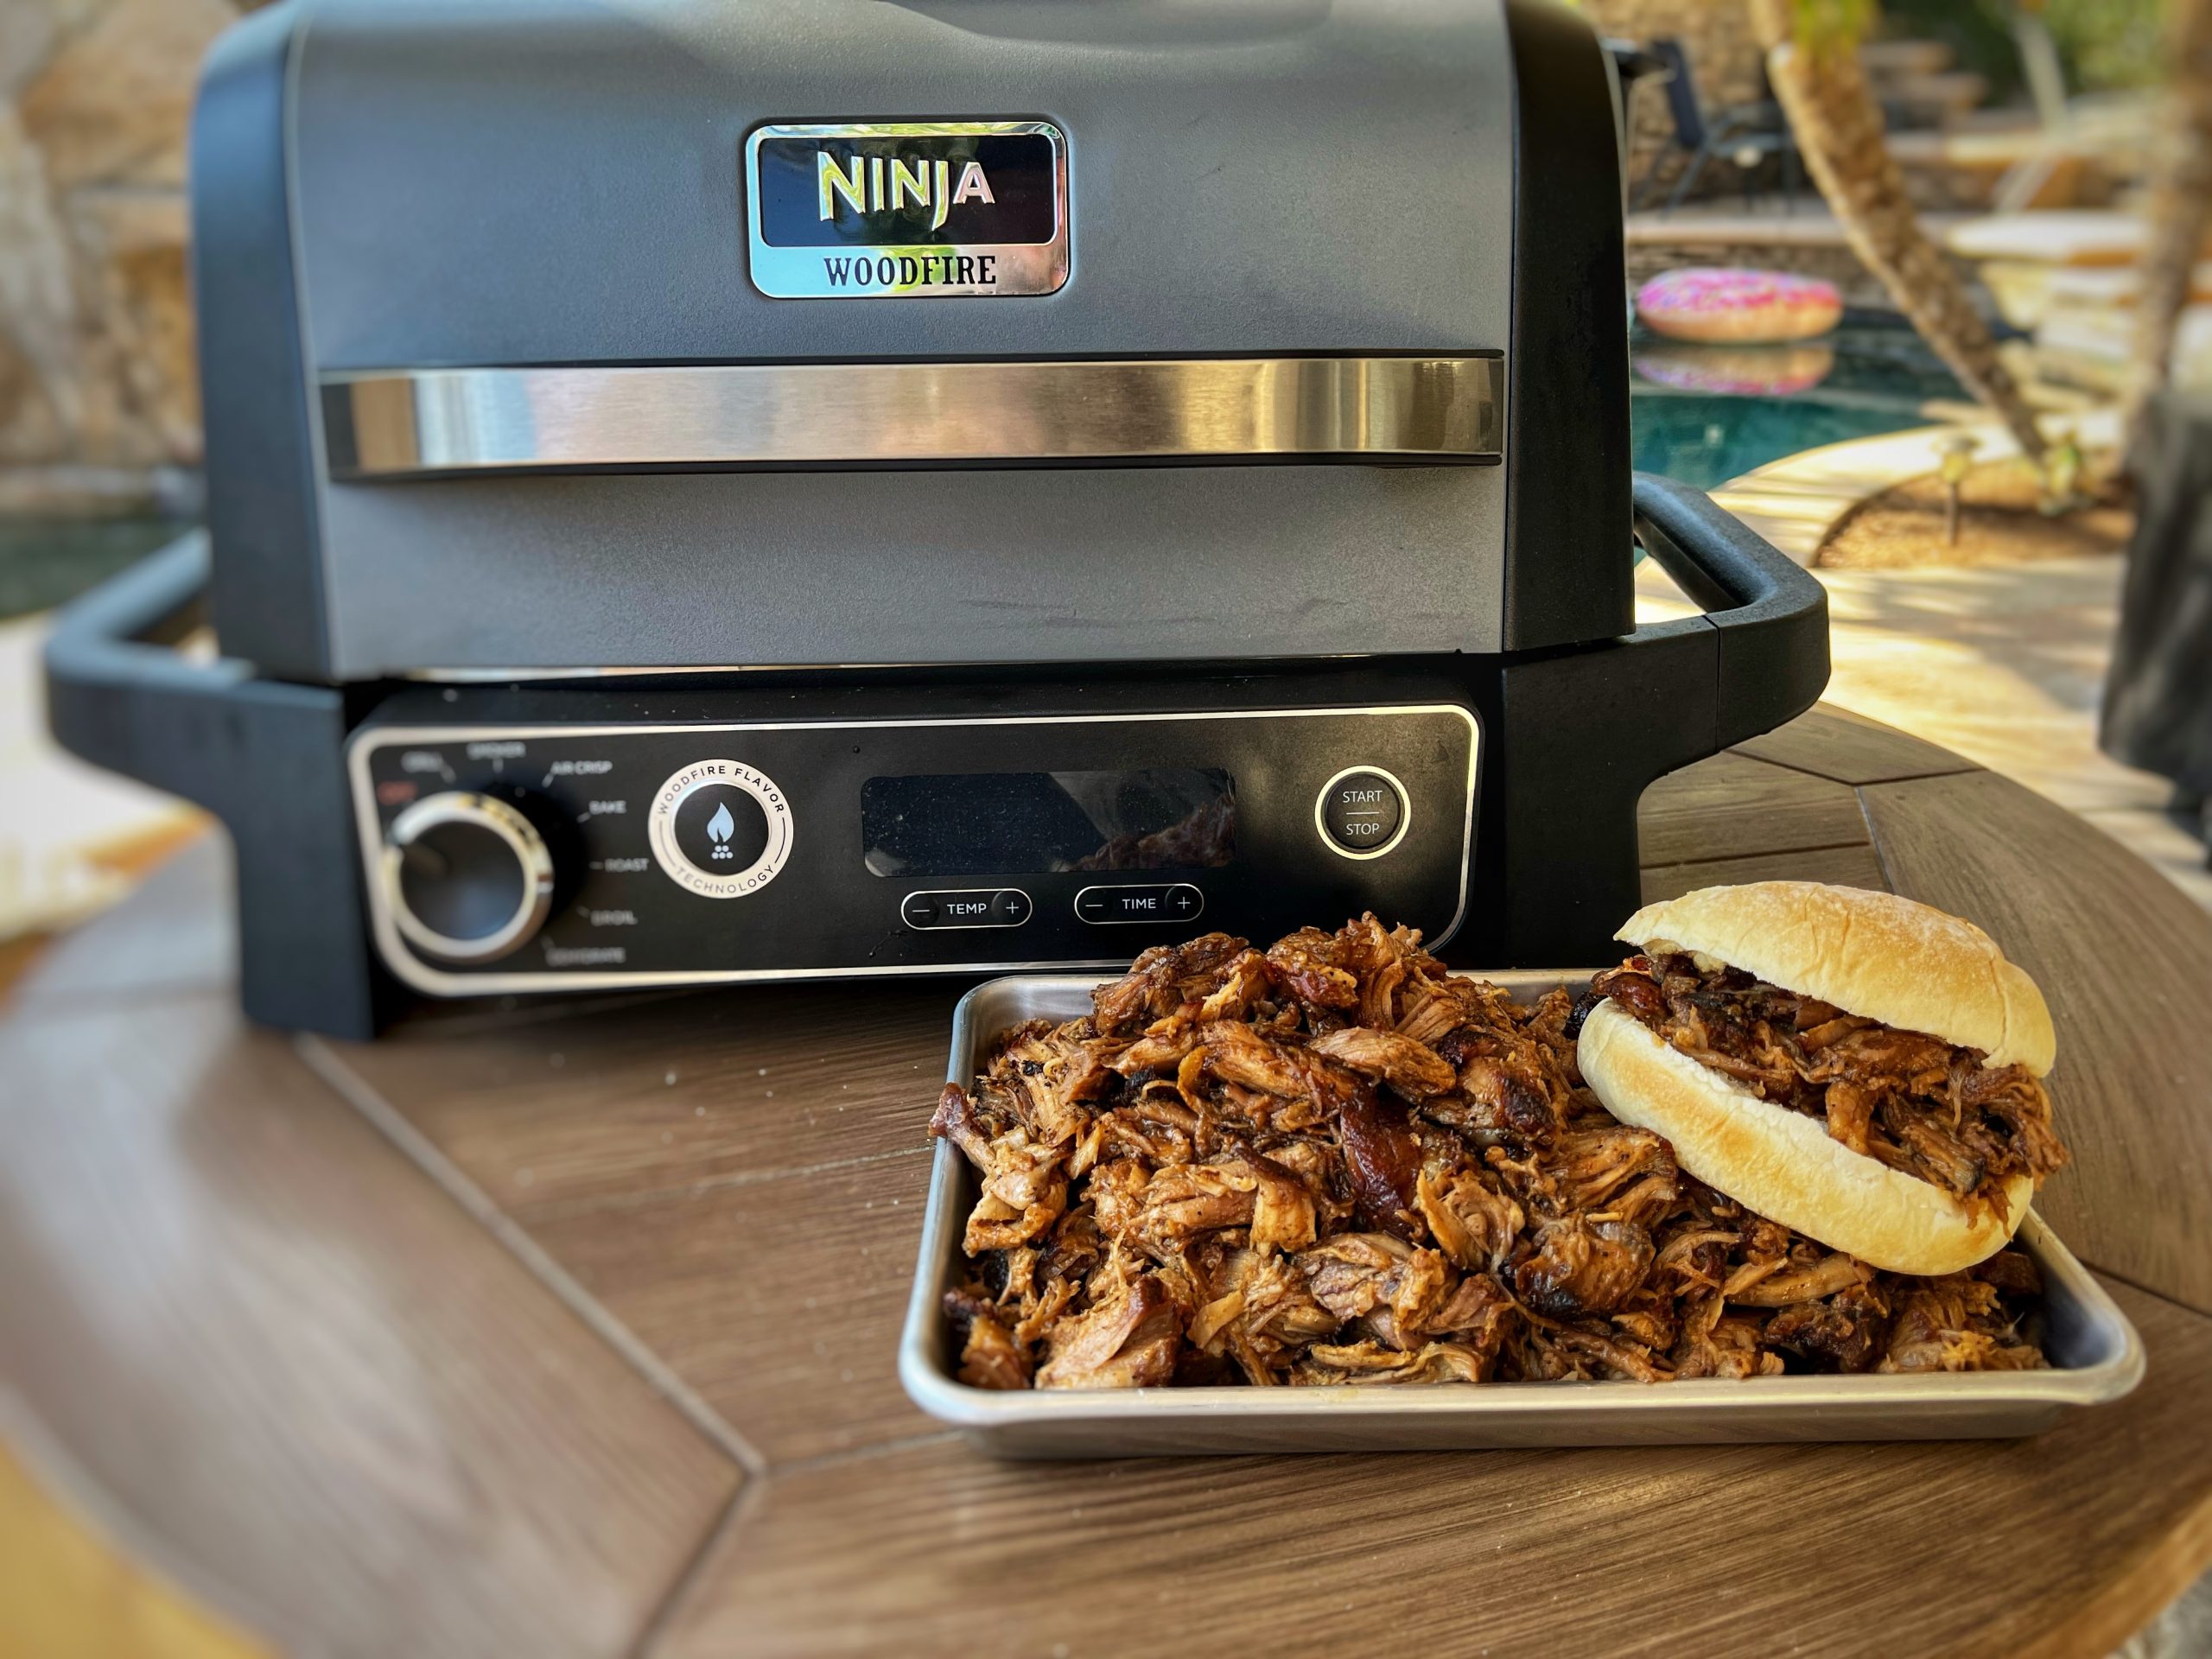 Ninja Woodfire Grill Smoked Ribs  Our First Cook on the Ninja Smoker 